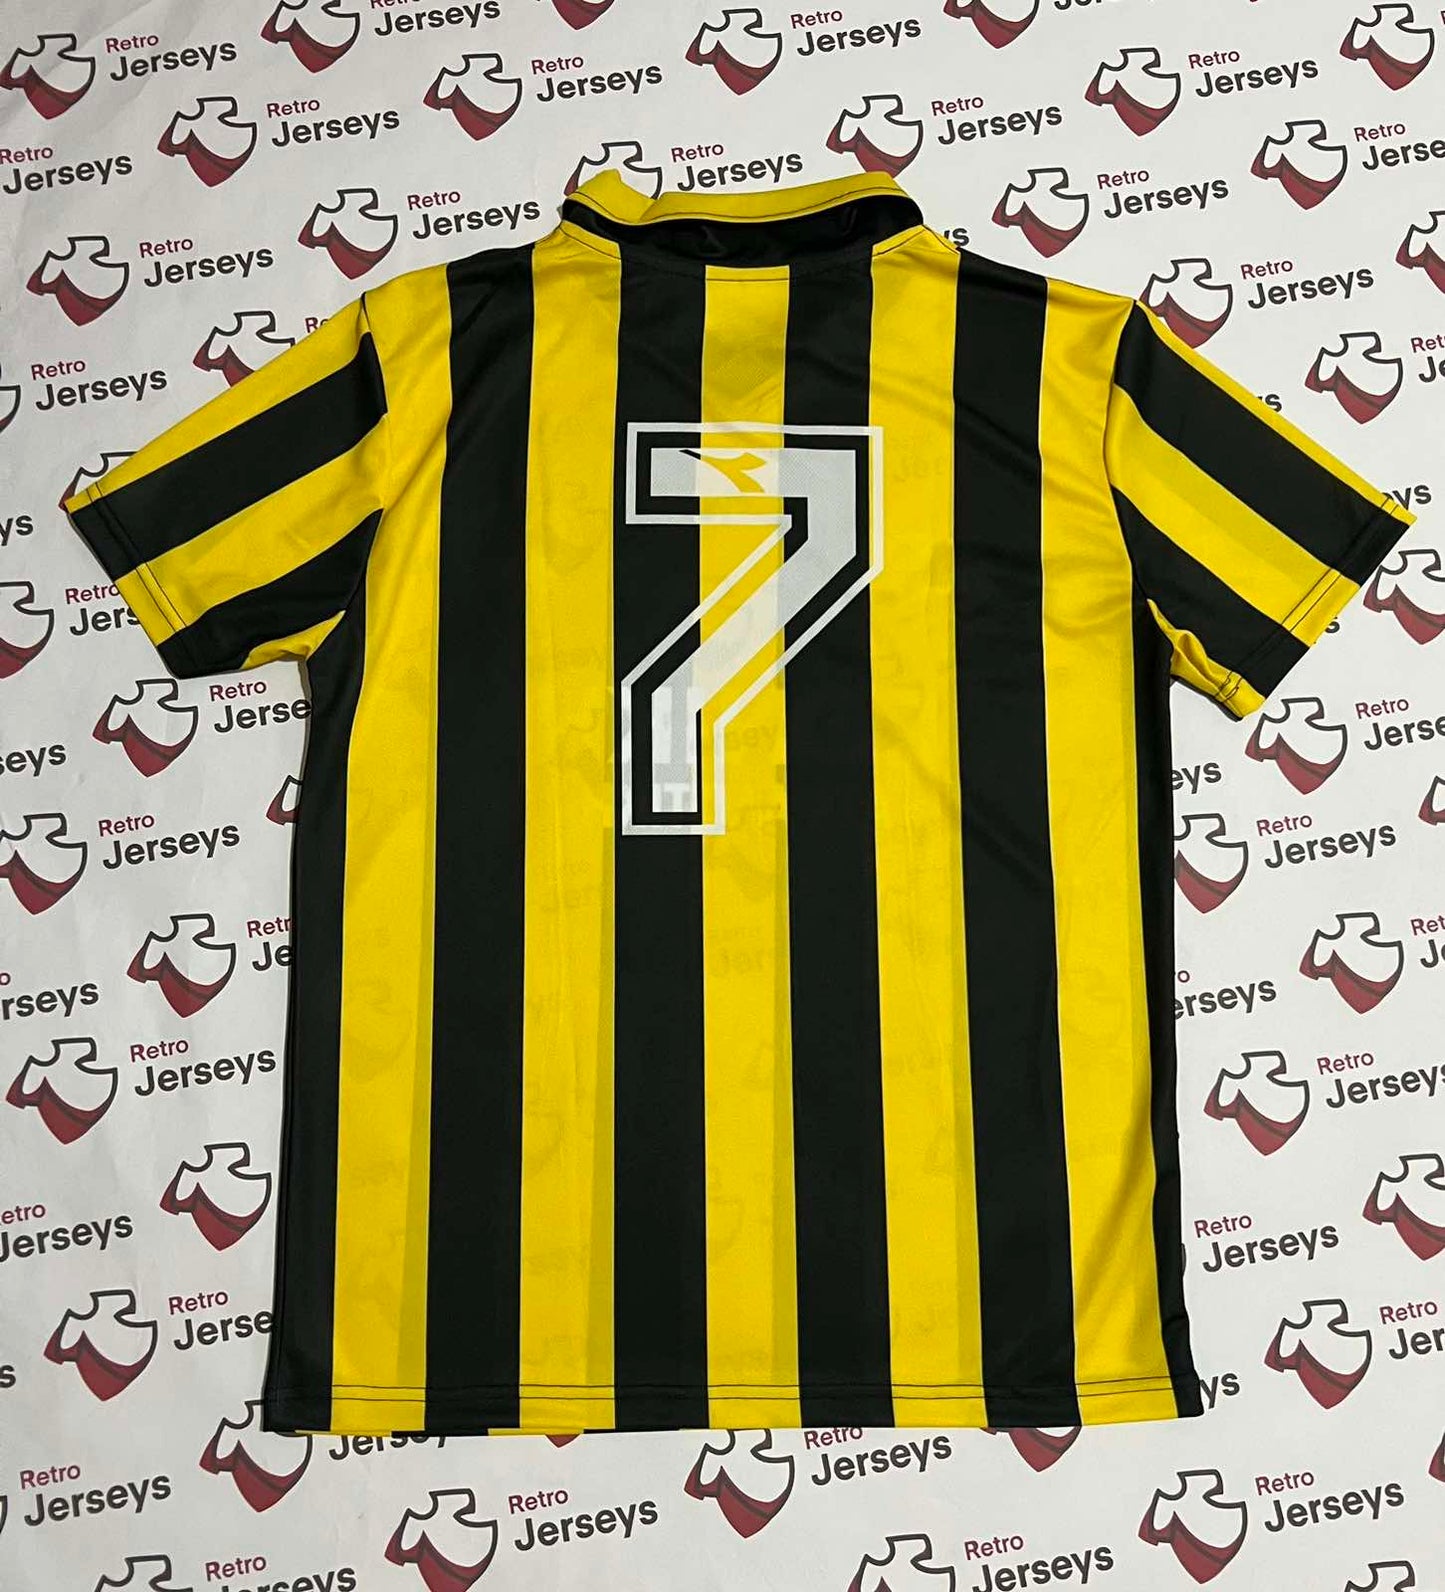 AEK Athens Shirt 1989-1990 Home - Retro Jerseys, φανέλα αεκ - Retro Jerseys